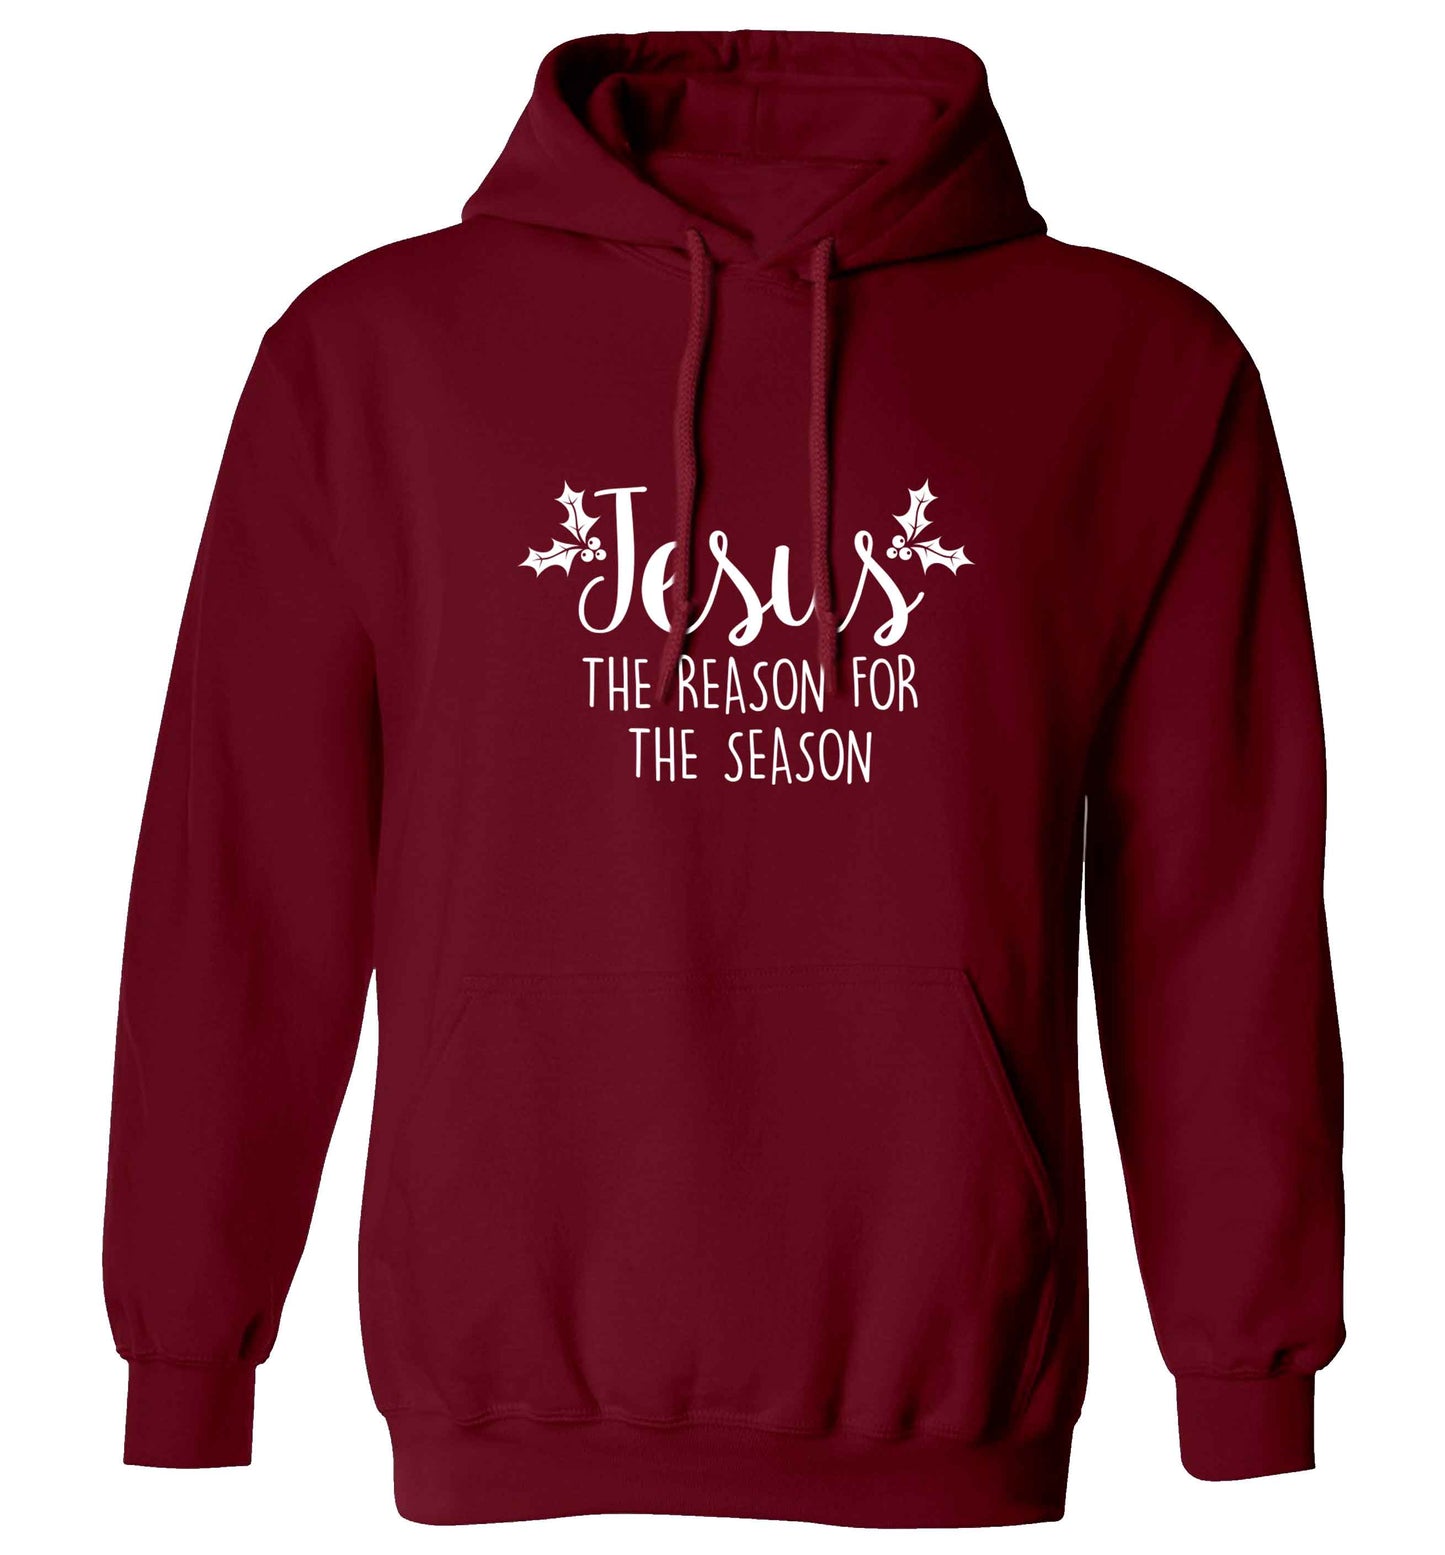 Jesus the reason for the season adults unisex maroon hoodie 2XL